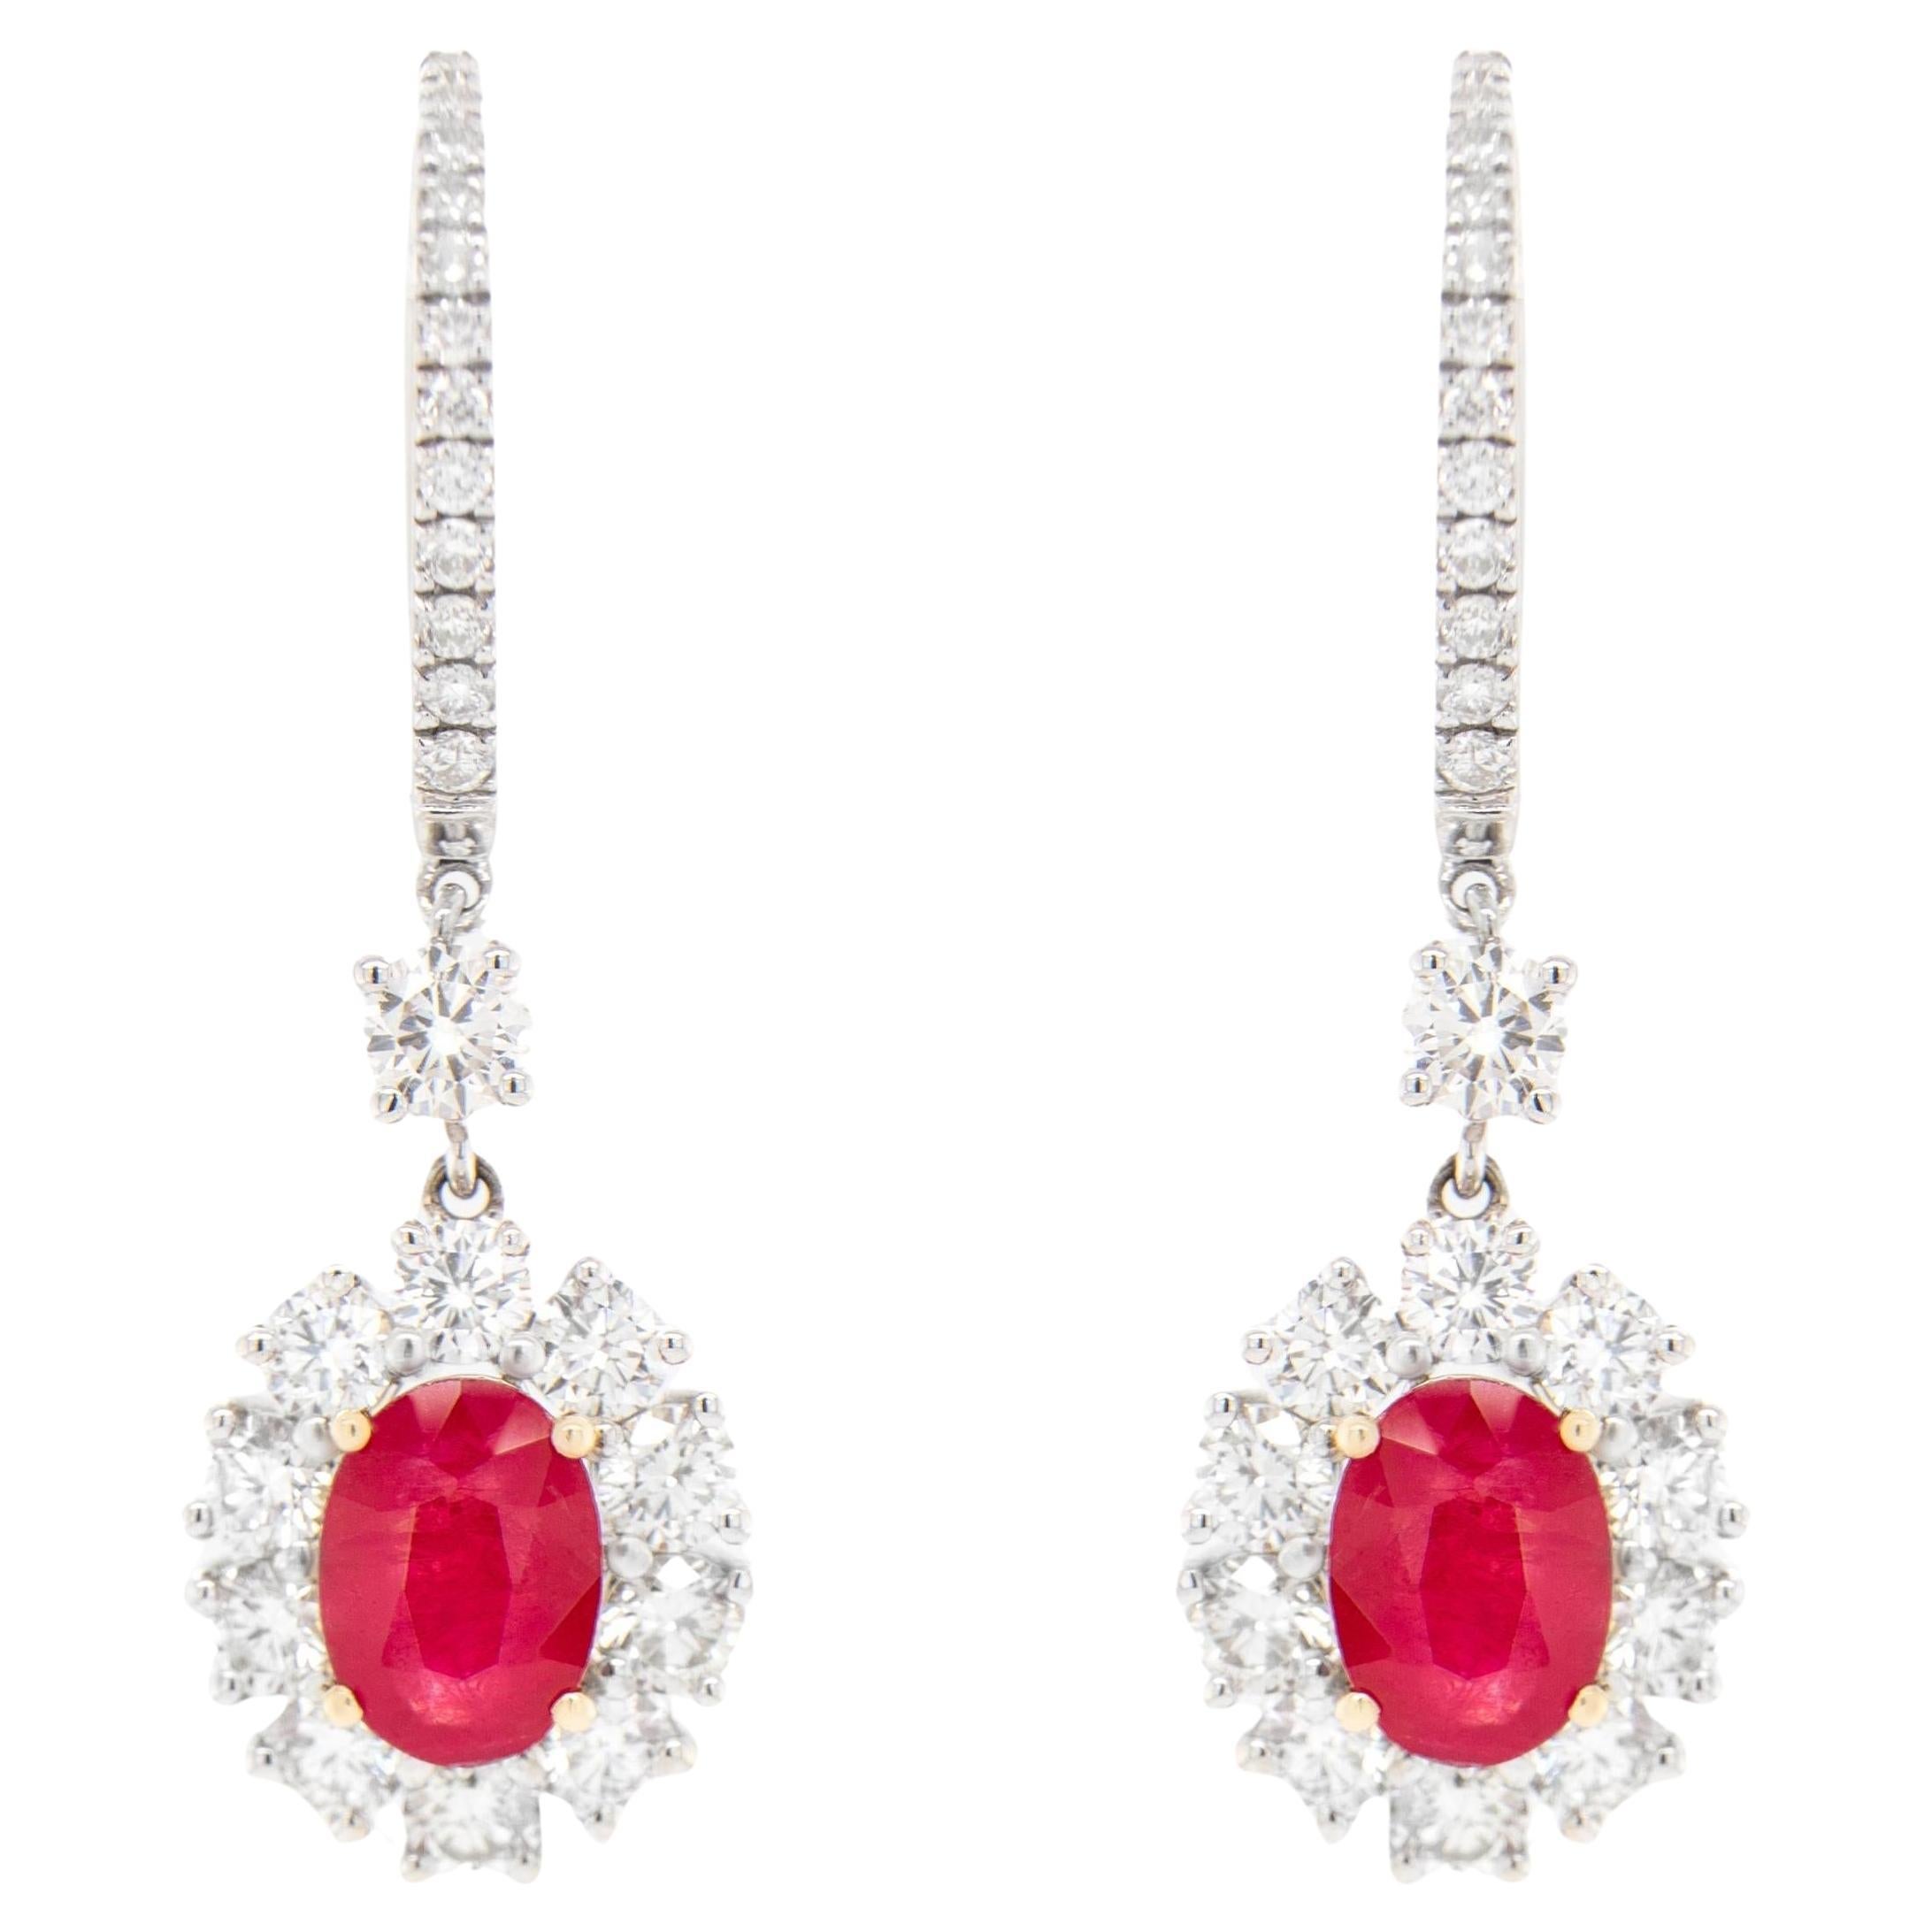 Ruby Dangle Earrings With Diamonds 4.17 Carats 18K Gold